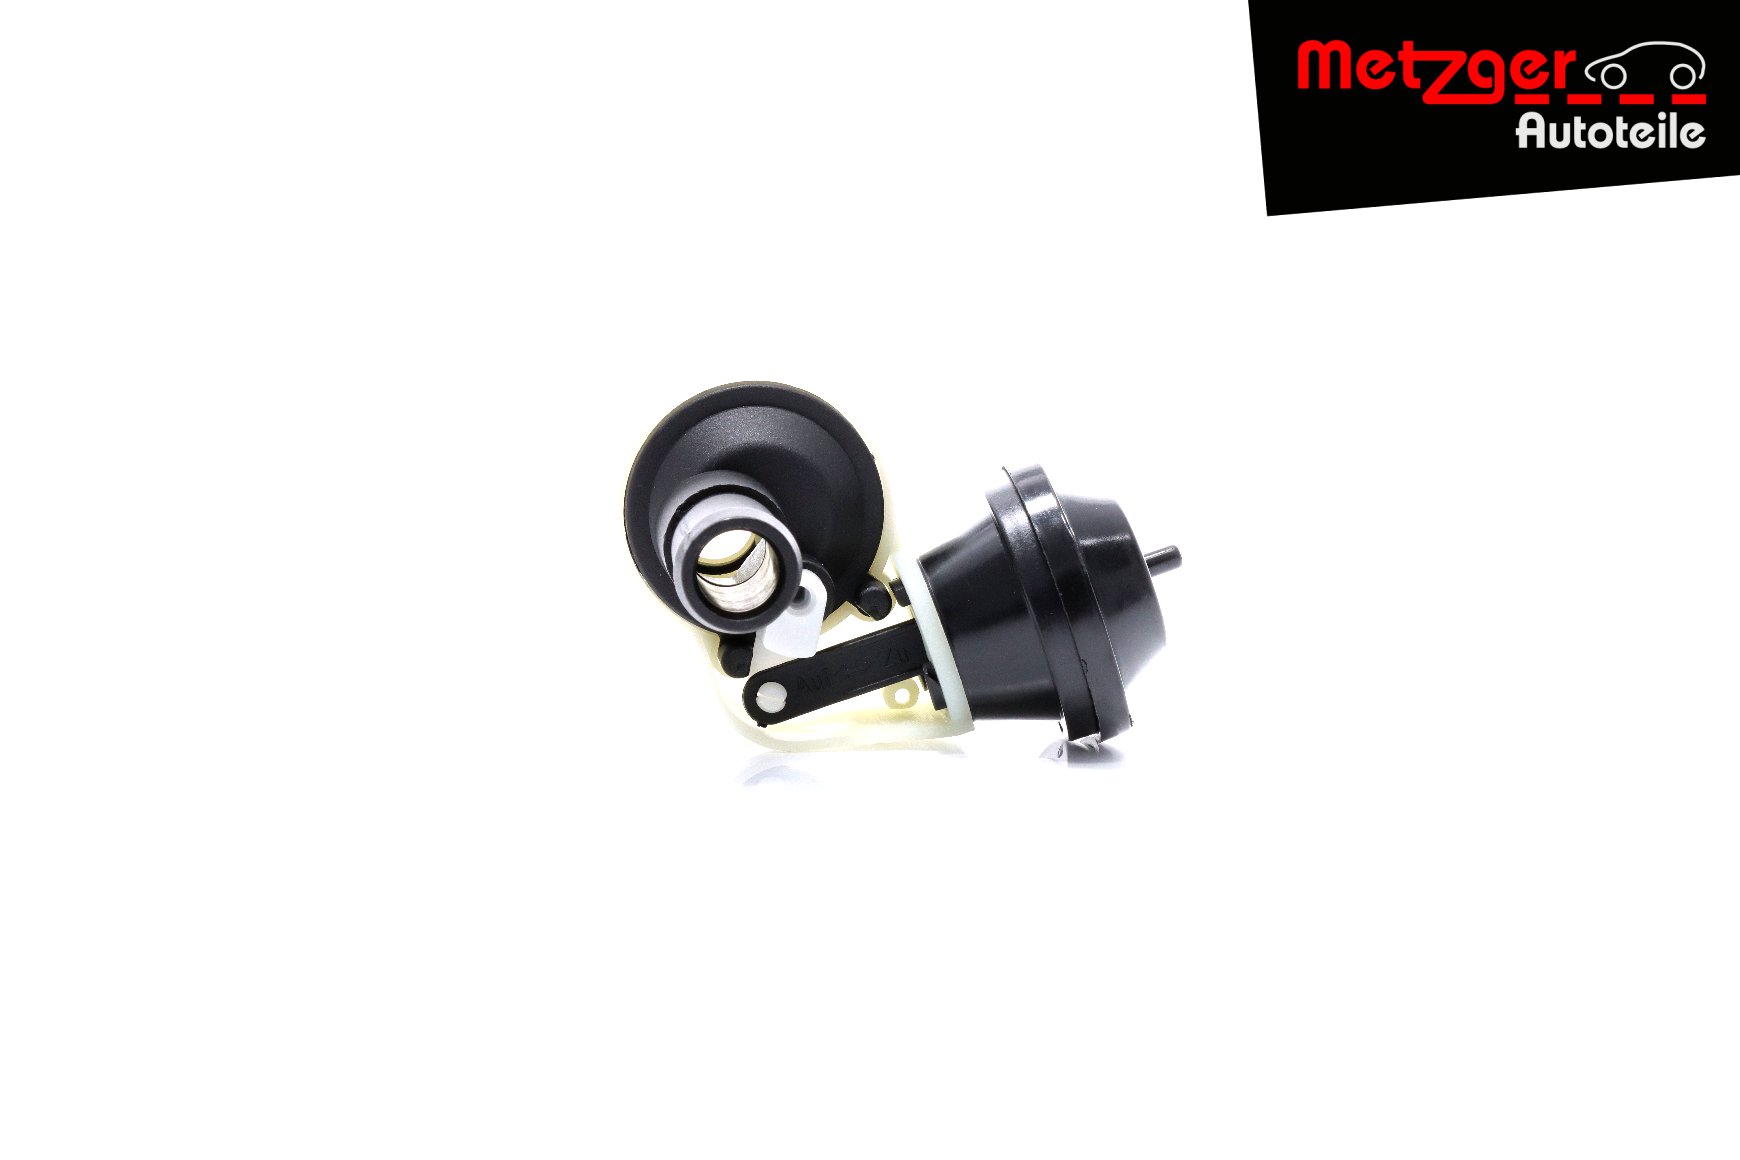 Volkswagen Heater control valve METZGER 0899080 at a good price